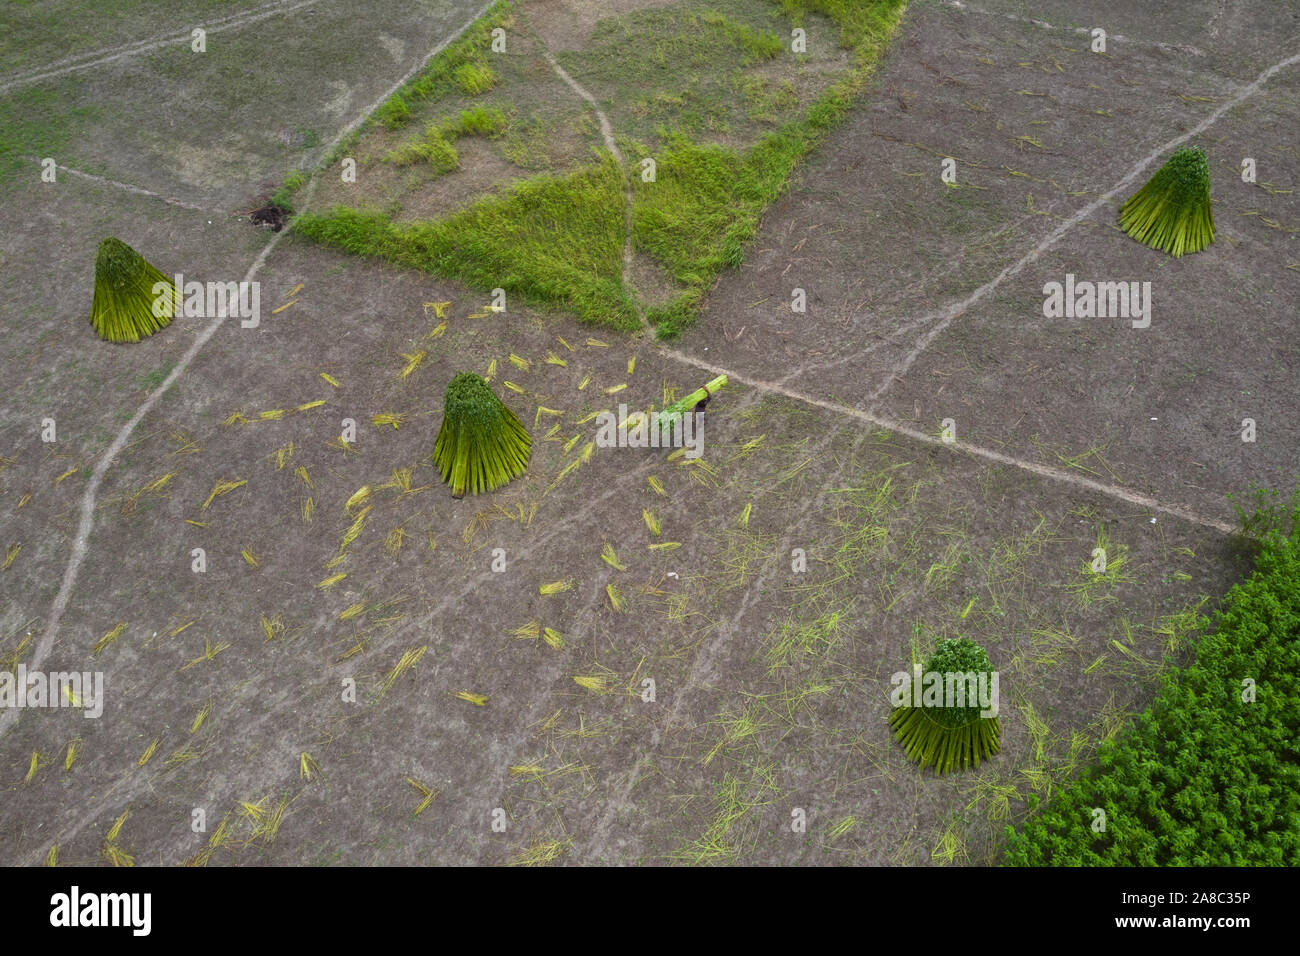 Jute stalks are kept on the field after harvesting at Faridpur, Bangladesh. Stock Photo